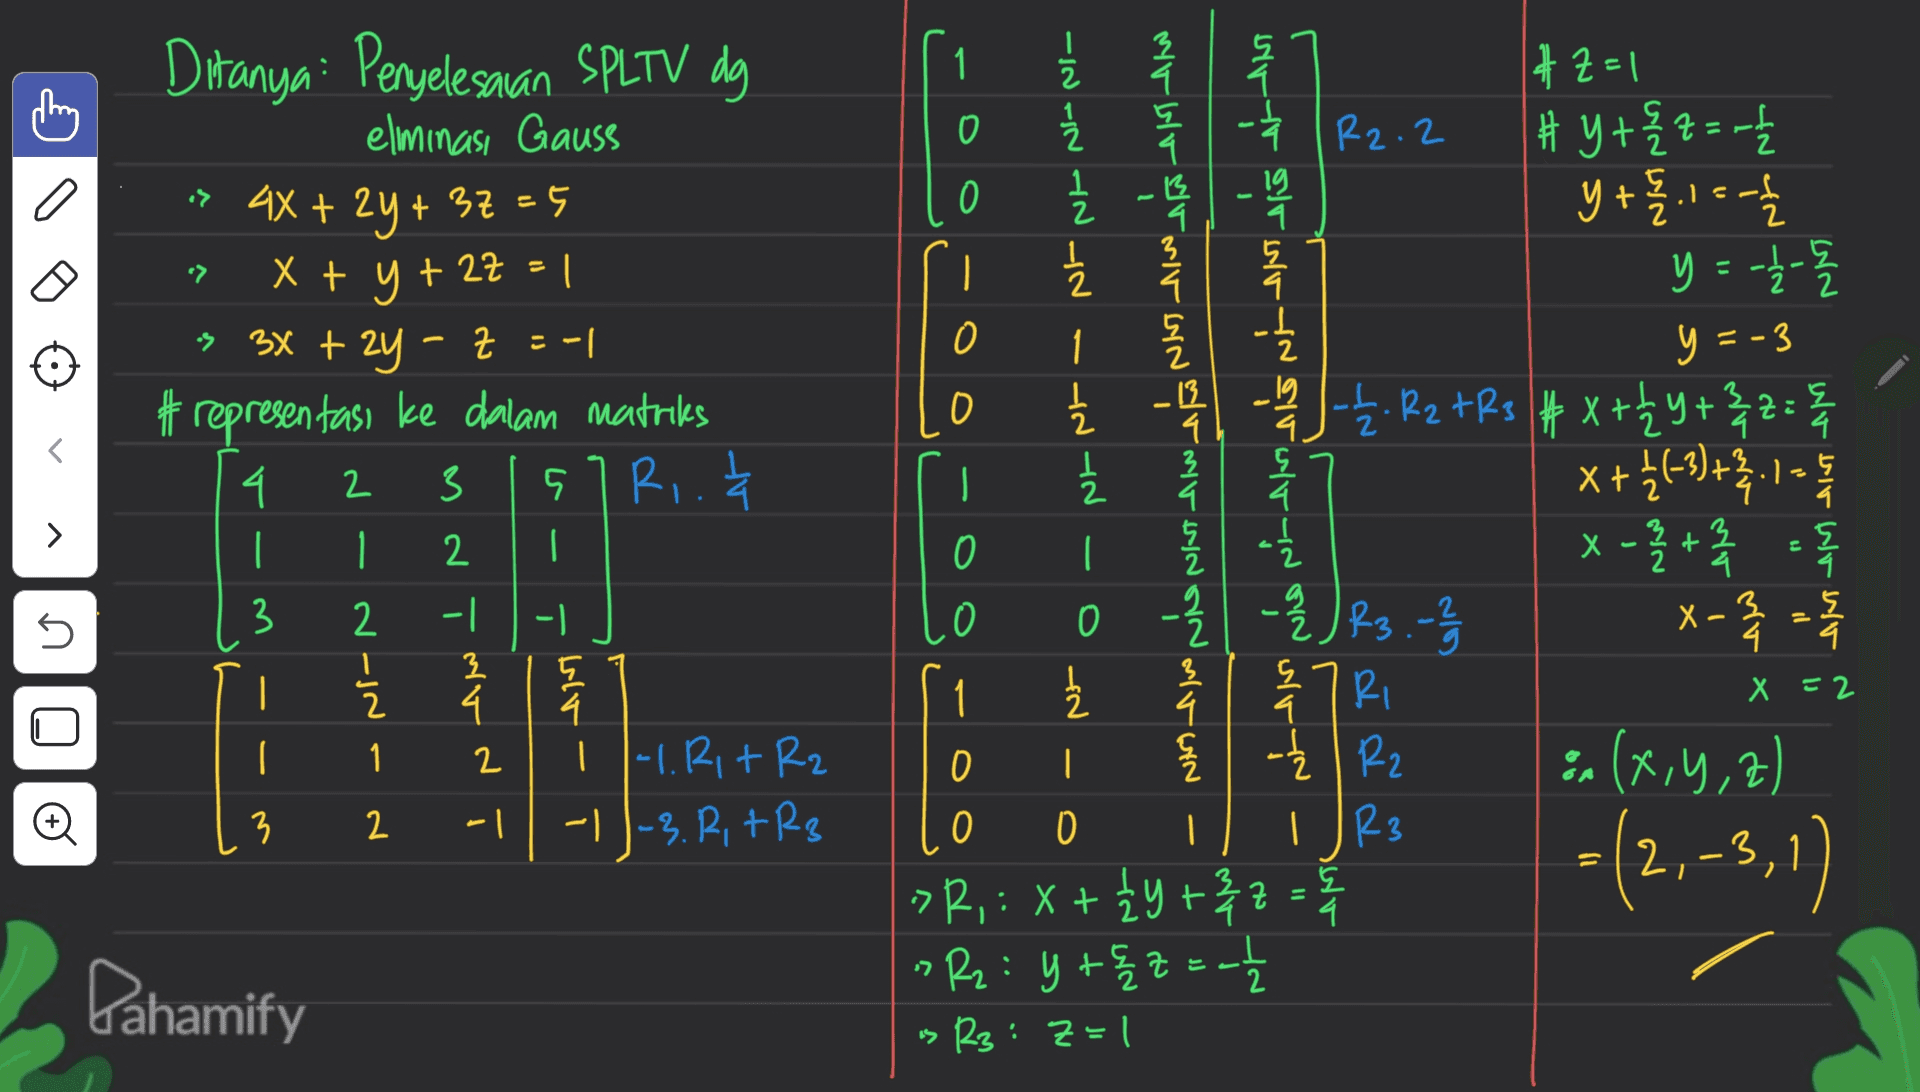 1. 2 0 AN ANAM 0 1 2 - 1 t . 2 도 > ㅂ x y + 2Z - ig 4 도 9 1 | 2 Ditanya: Penyelesaian SPL TV dg eliminasi Gauss 4x t2y4 3군 25 X + 9 91 2 3X + Y - F = -1 # representasi ke dalam matrikes 4. 3 R.국 | ) 0 도 HTTANTATE =-3 3 O 1212 -13 4 3 2 5 | 4. 도 4 l > 카려 R2.2 ㅒ들려는 바들이다을 늘 두 y 놀 y 늘 목 ~목 늘2 tR3 뱌 x늘 마록려동 놀 #X 늘 롬 동 X + (4) +1 | 를 록 0을 1올JP3.를 x - 호 RI 모 ya) D HP : X + 9 + = R: 바돌근 =는 : 근녀 5. 1 2 0 X를 아름 | 2 3 -1 0 0 2 1 2 . 도 2 2 로 + 도 4 4. 동 5 4. 4 X2 로 | IQ 1 2 ( 1 1 2 nt din - - 0 || |-12 + R2 ㅔ 3. R, +Rg 2 22 - 3 2 | 0 || R3 -(2,-3,1) 도 1 wr 17 - LL 2 Pahamify 